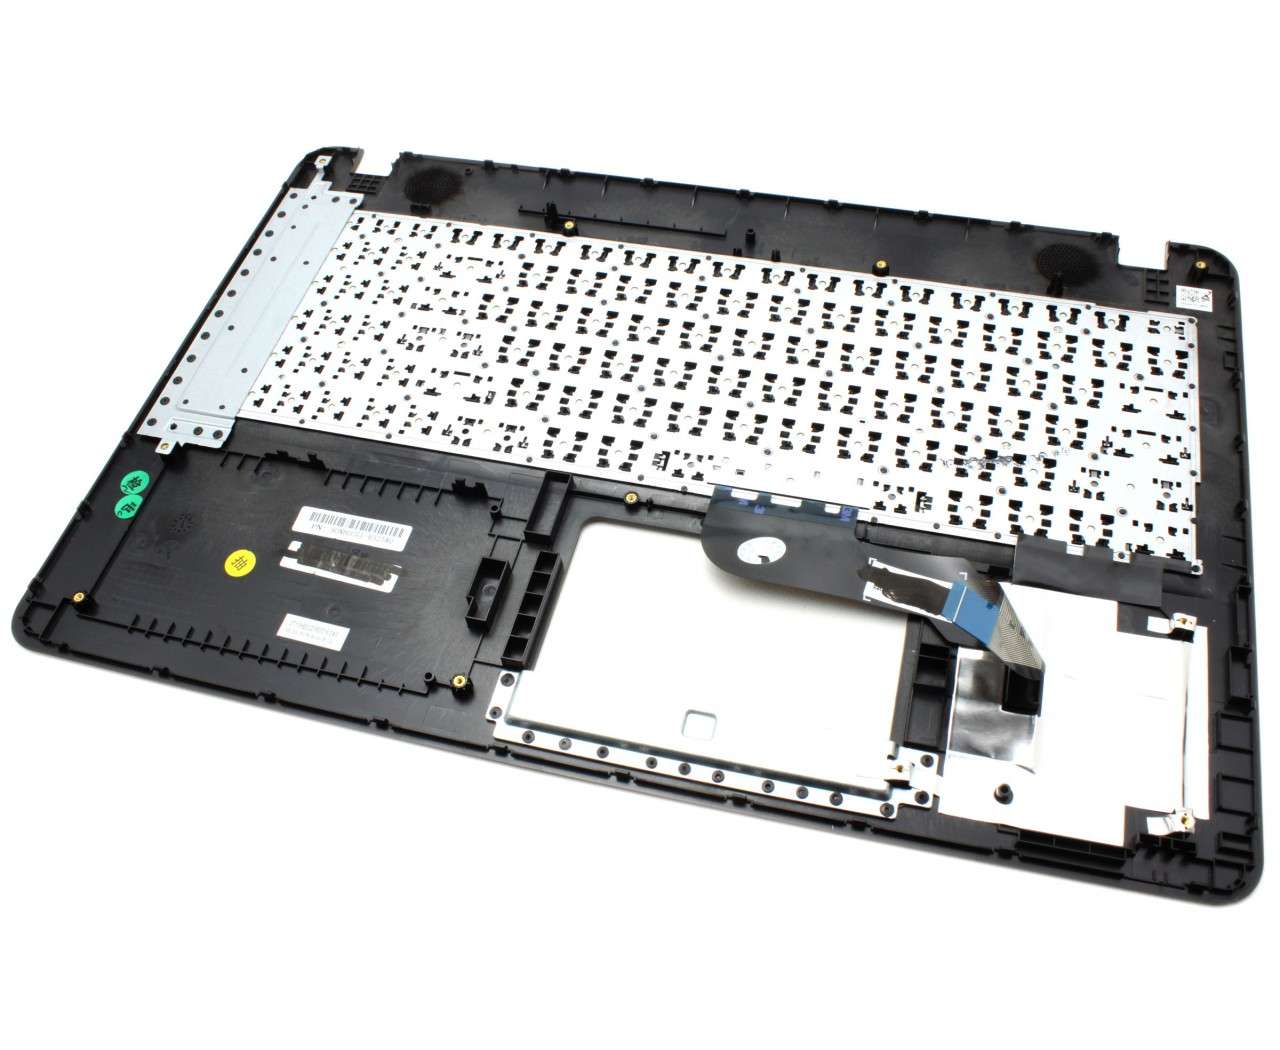 Tastatura Asus K541UA Neagra cu Palmrest Auriu